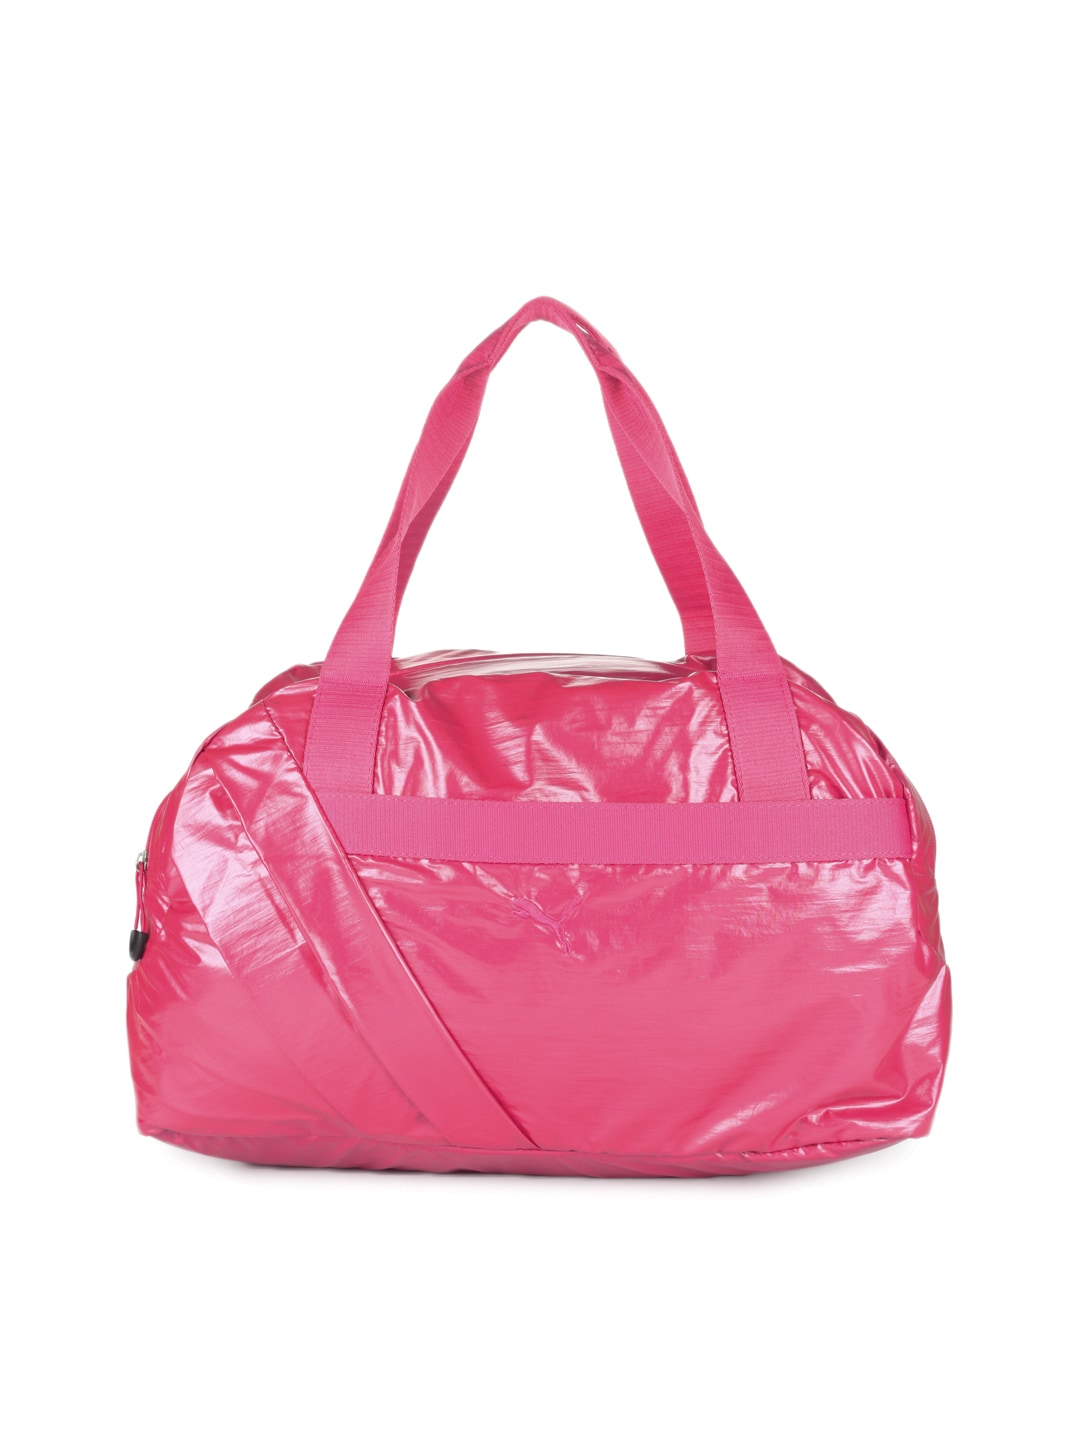 Puma Women Fitness Barrel Pink Handbag